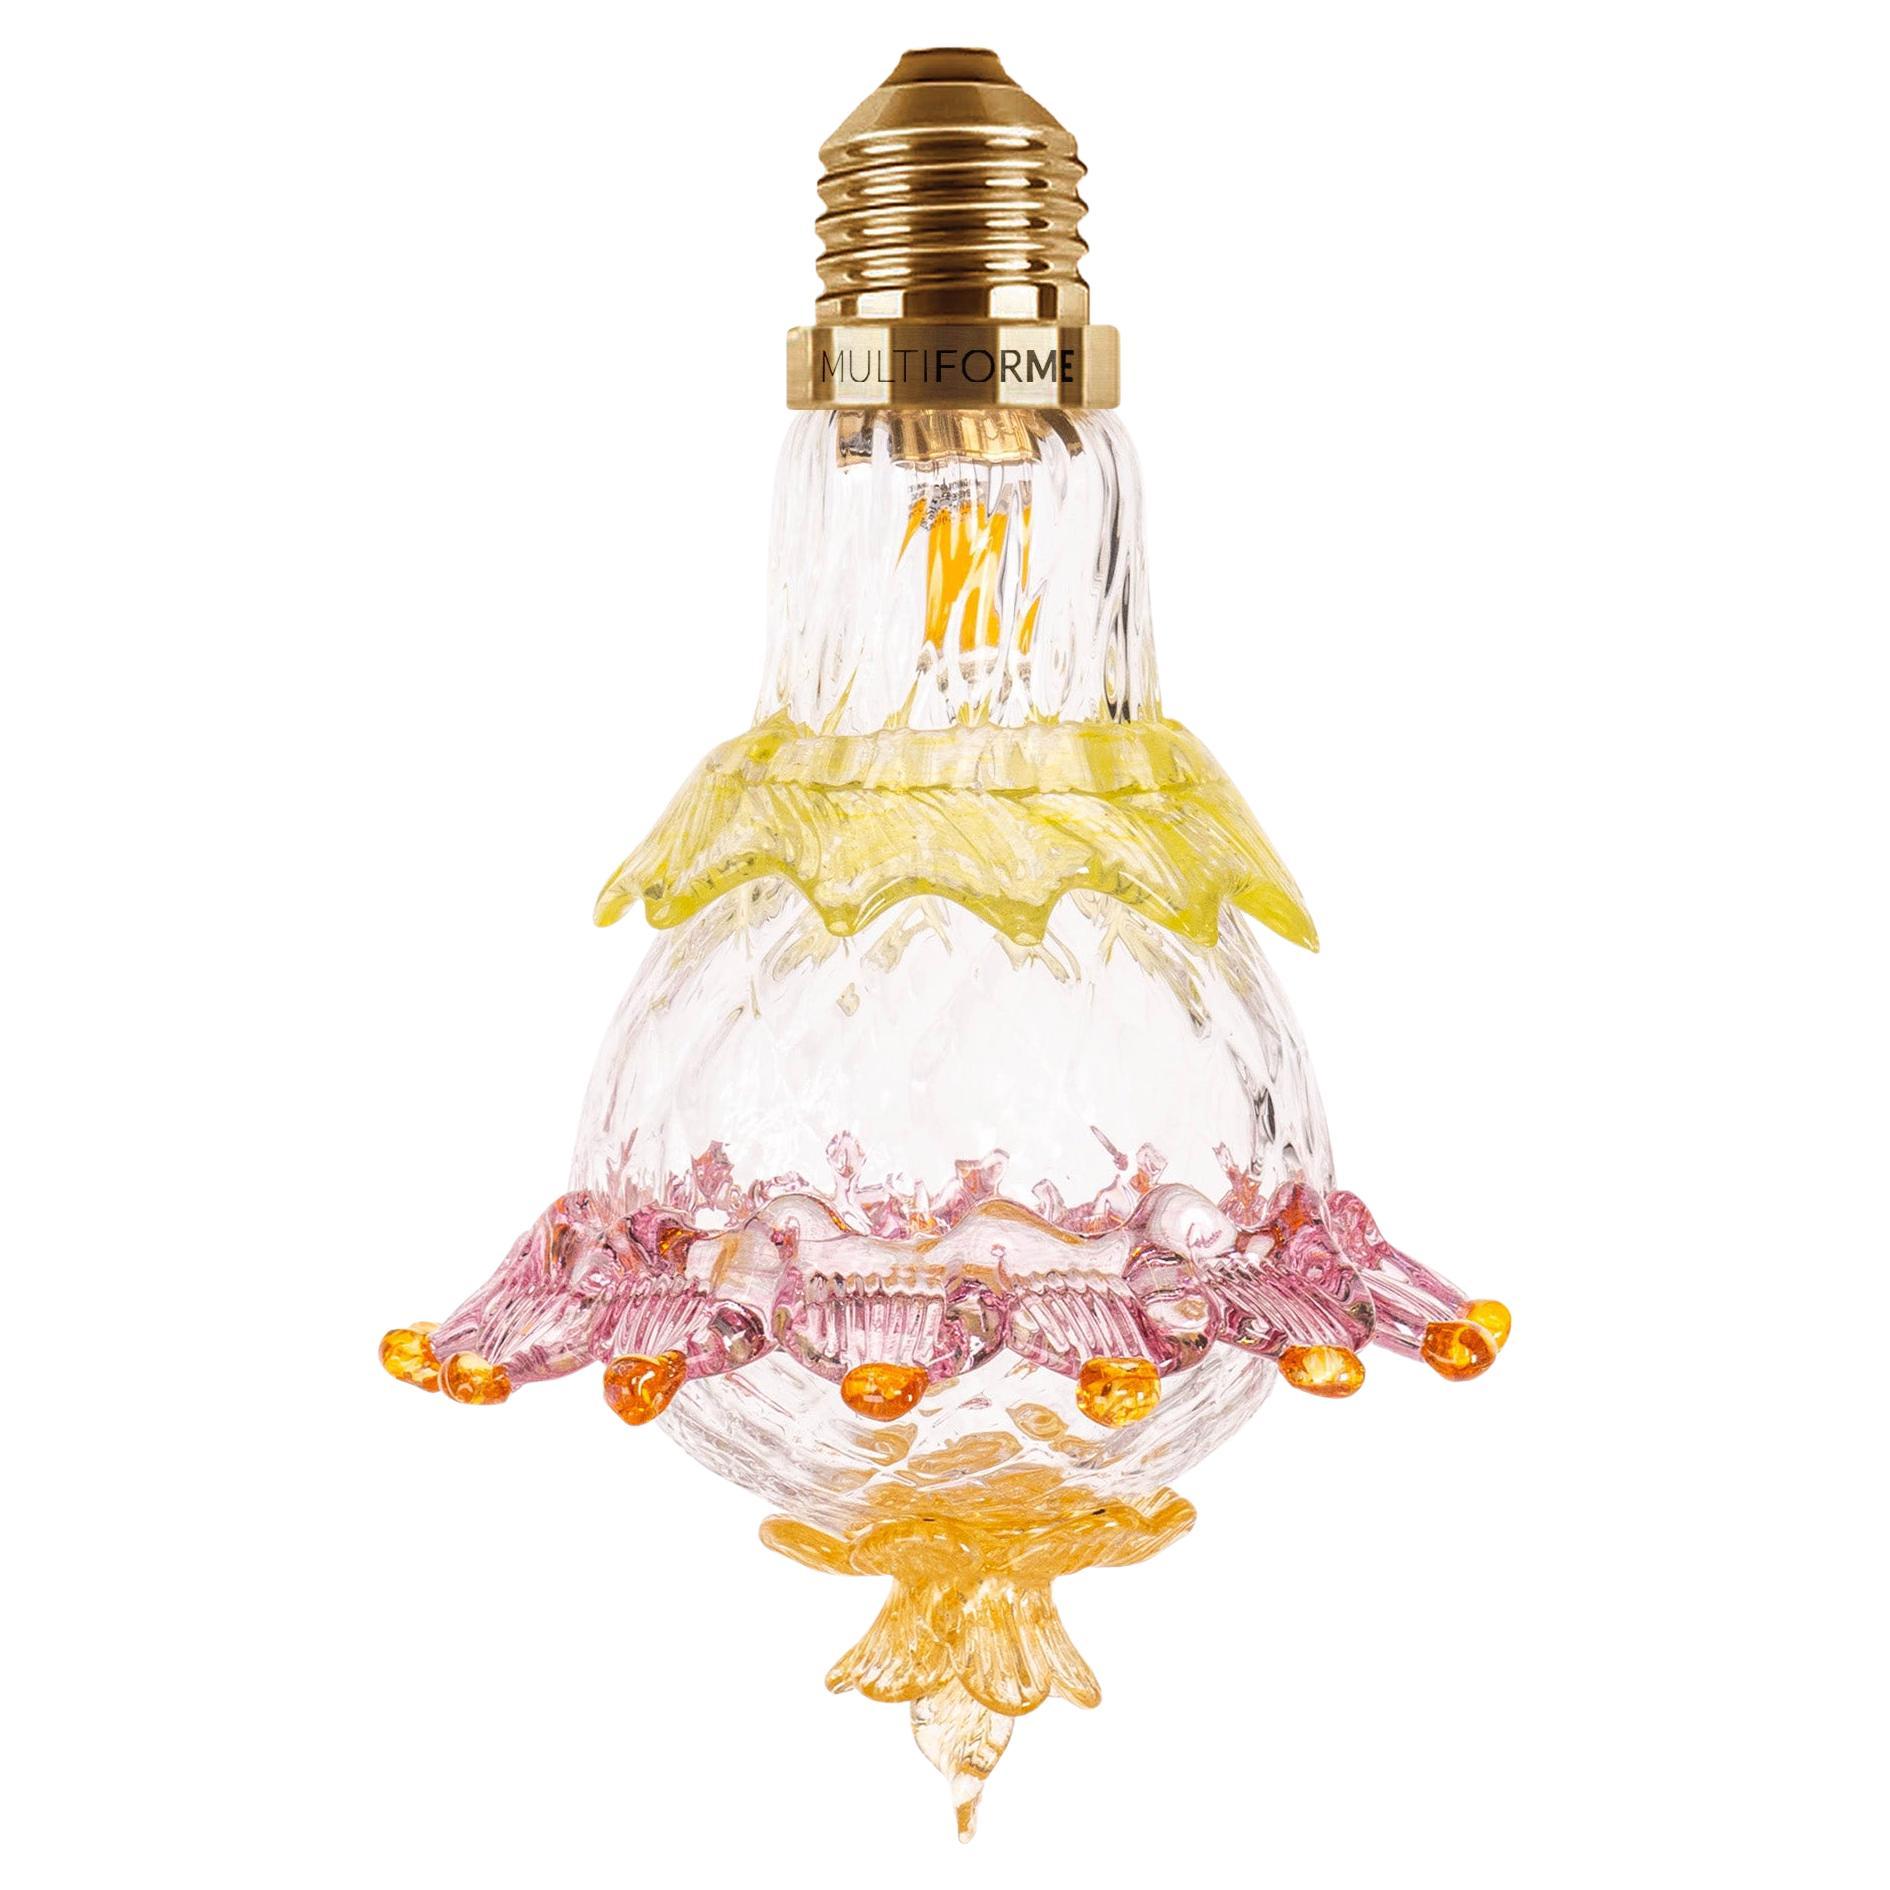 Artistic glass lightbulb chandelier Murano Bulb Marcantonio X Multiforme #10